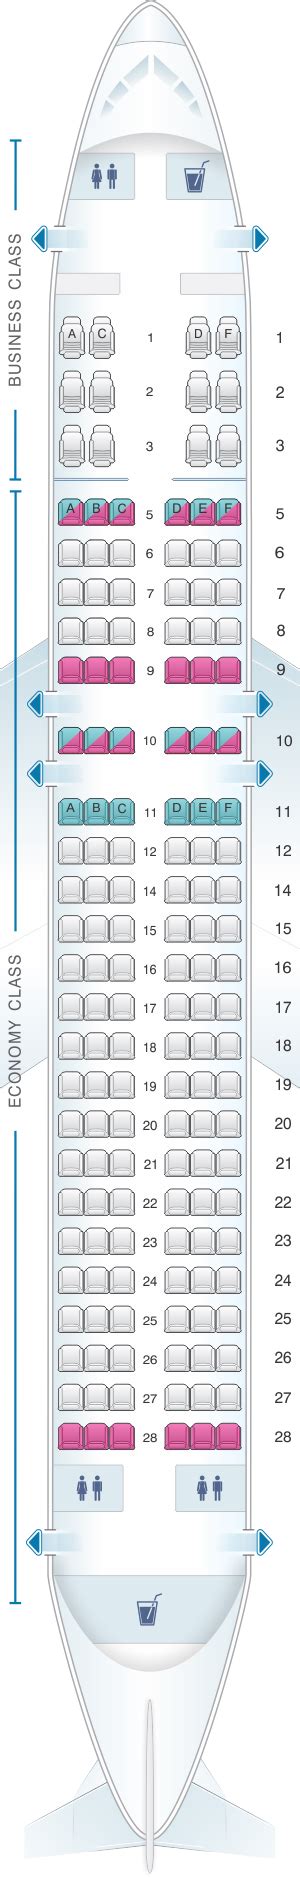 Tui Airbus A320 Seating Plan